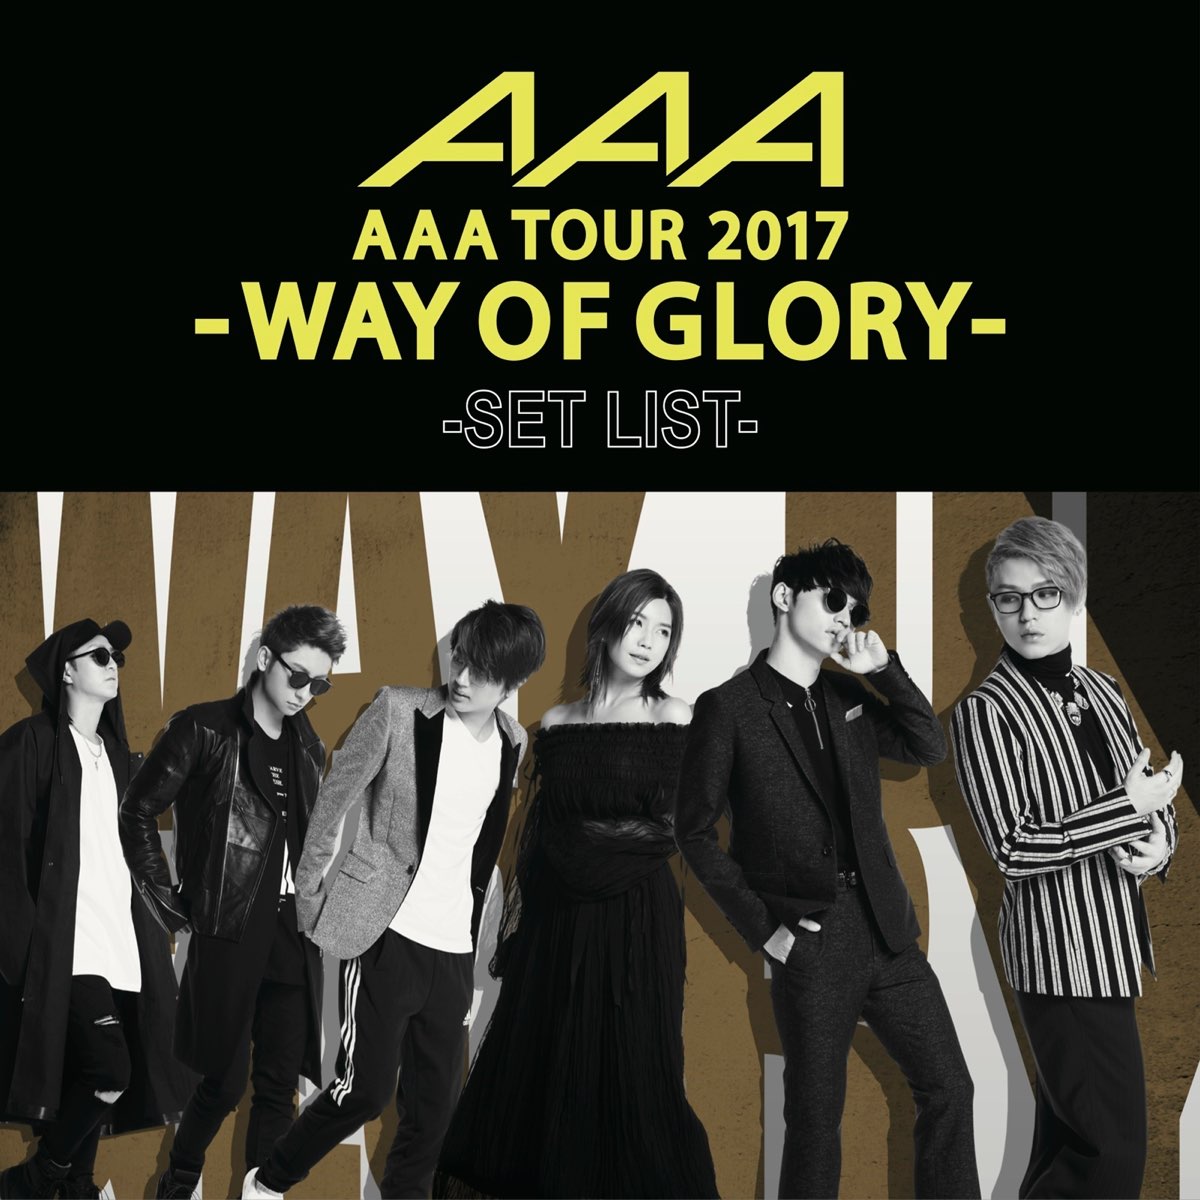 AAAwayofglory ペンライト - 男性アイドル